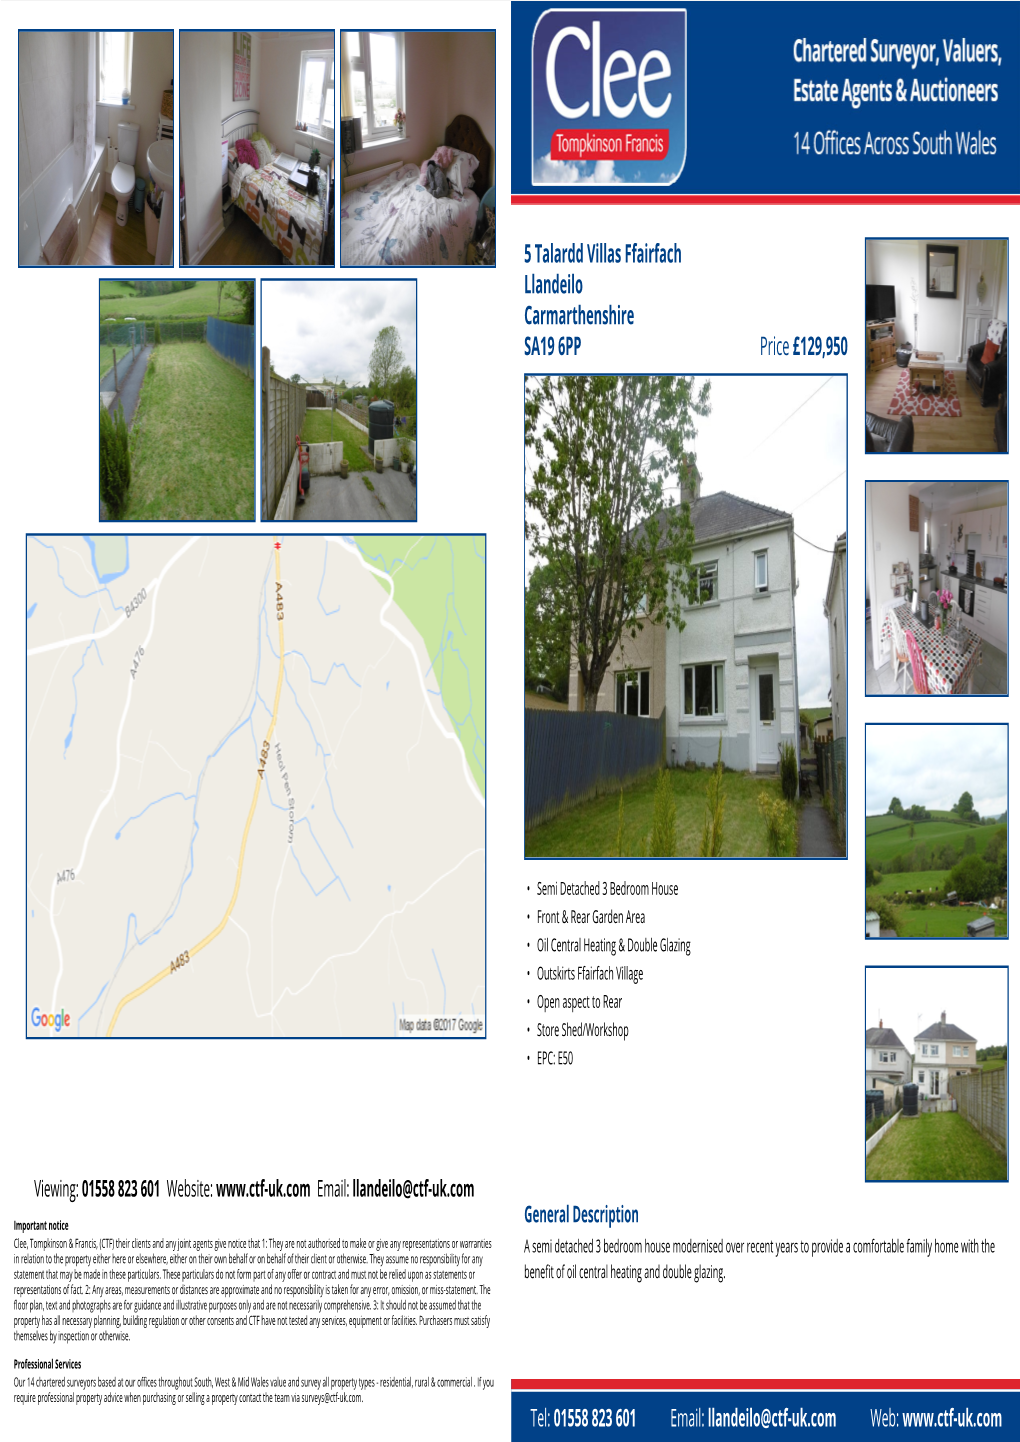 5 Talardd Villas Ffairfach Llandeilo Carmarthenshire Price £129,950